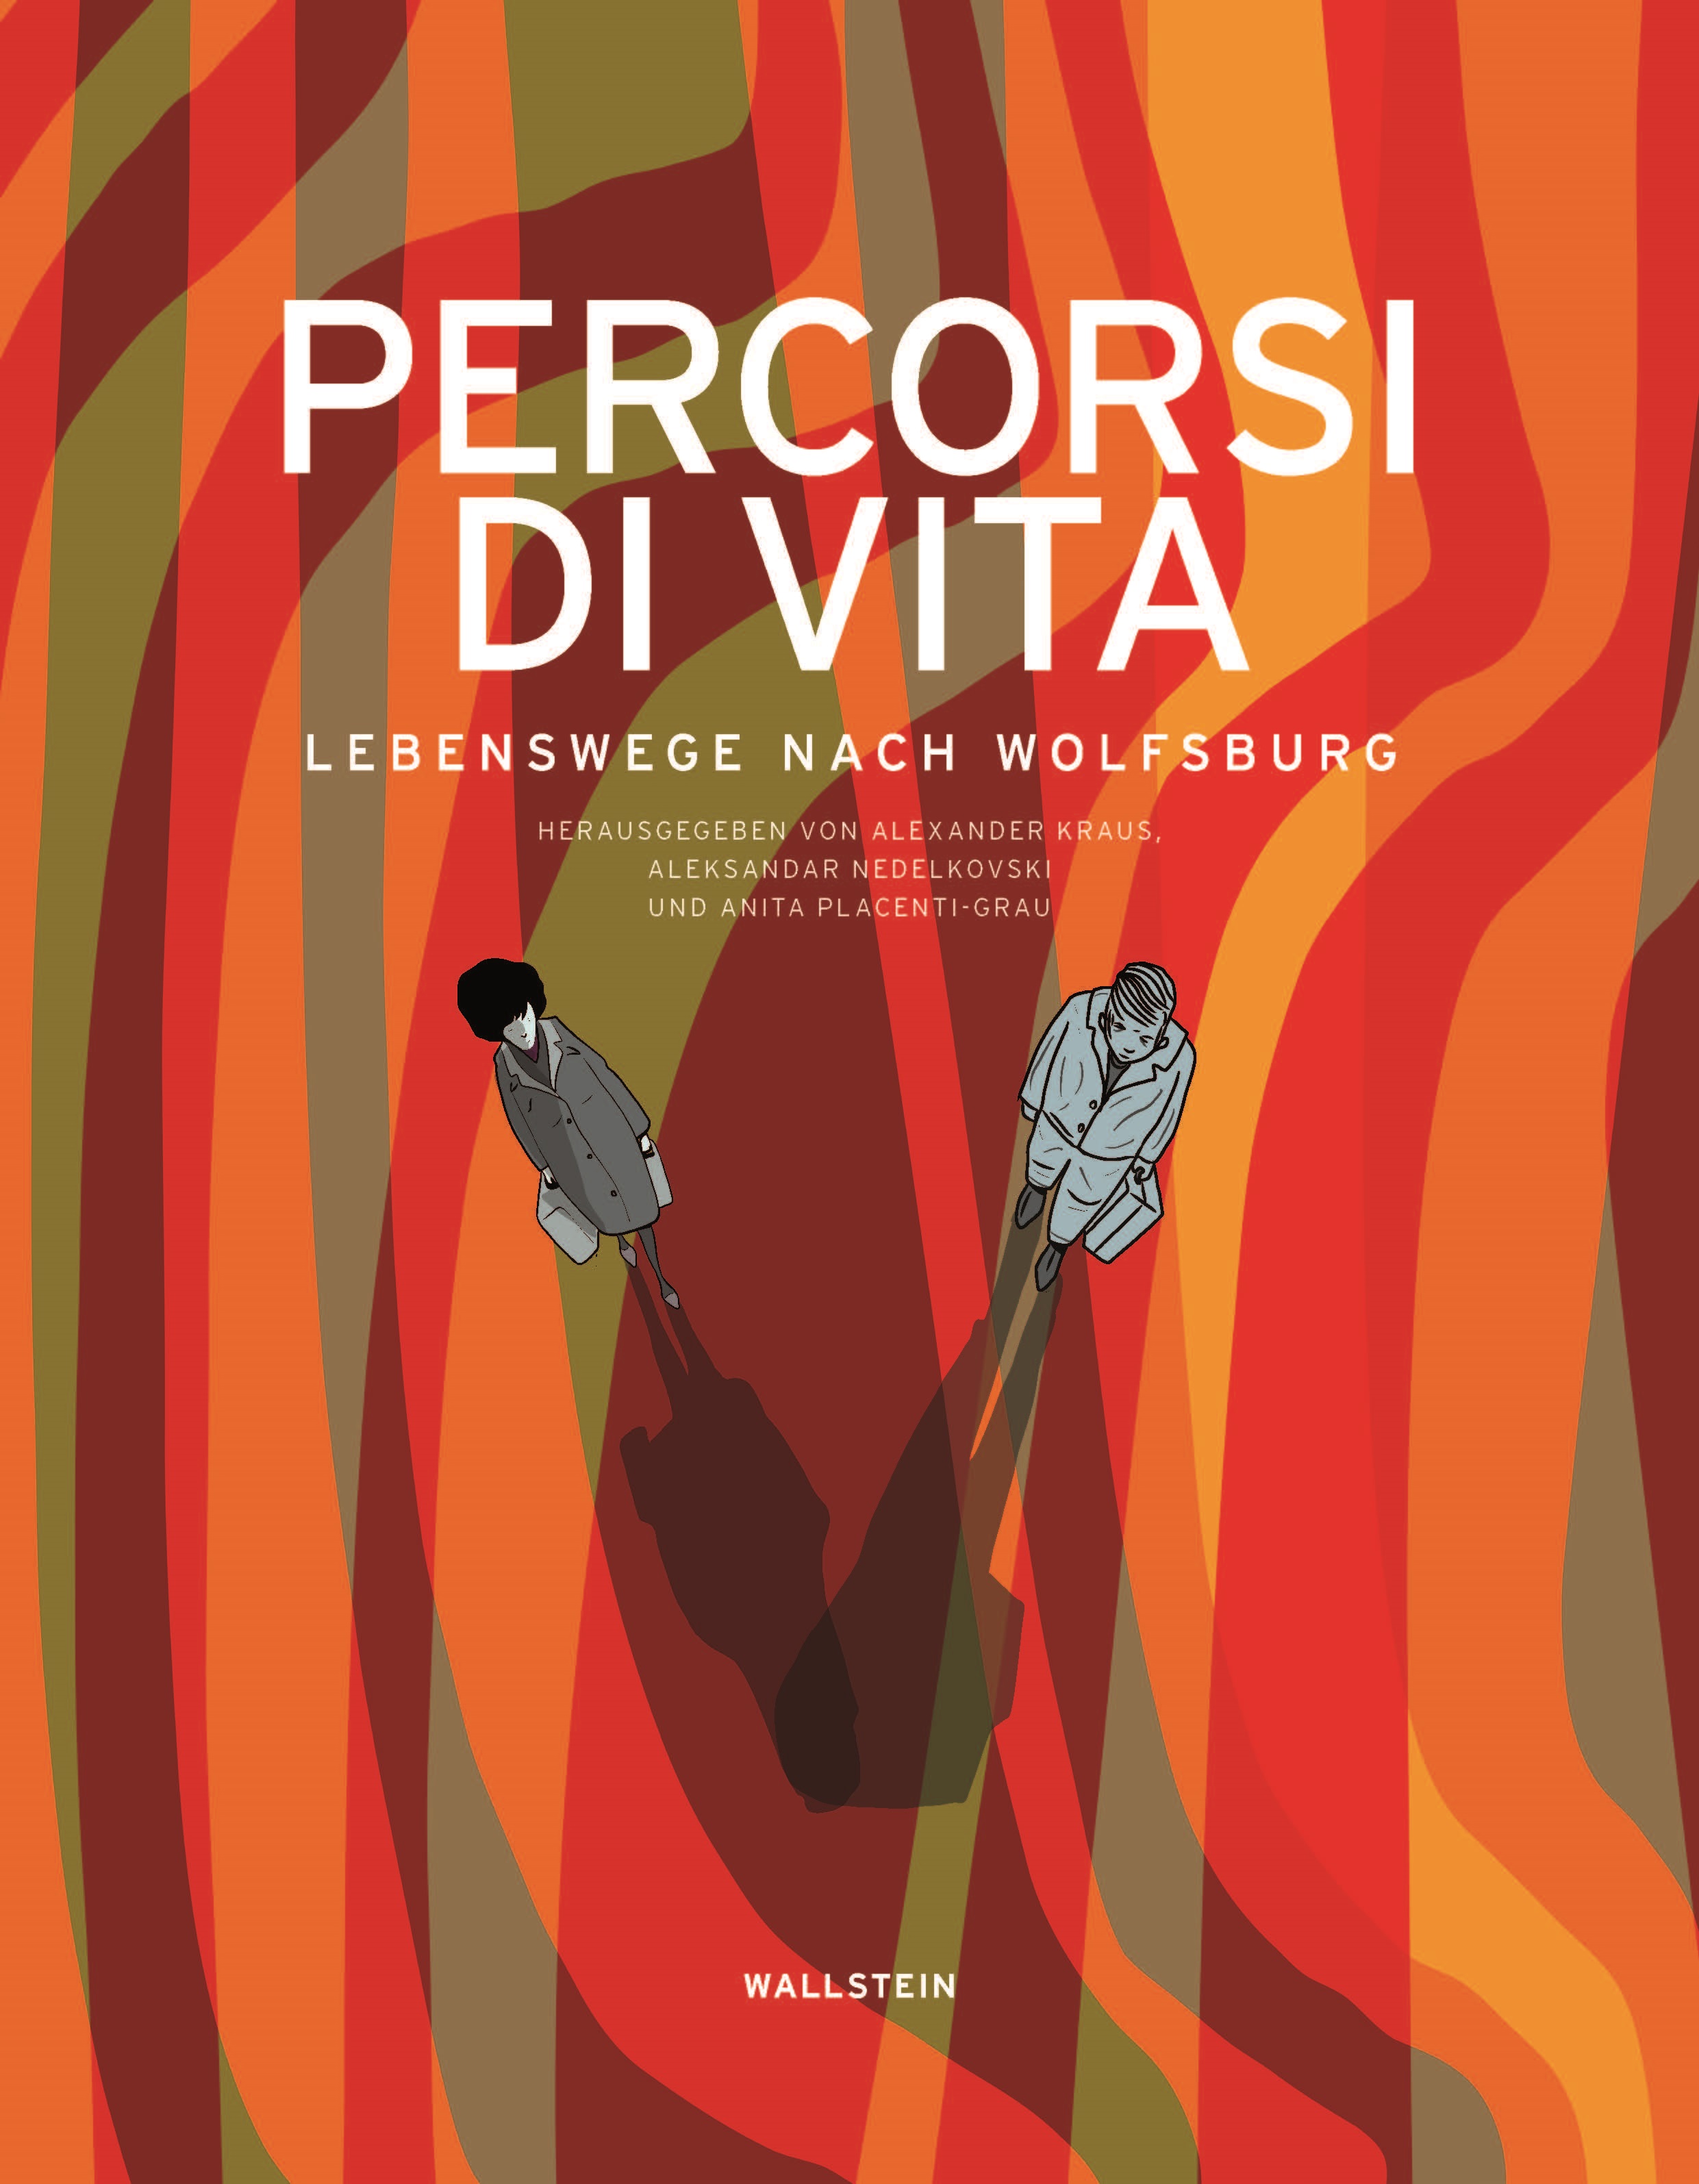 Title page of the book "Percorsi di vita. Life journeys to Wolfsburg"